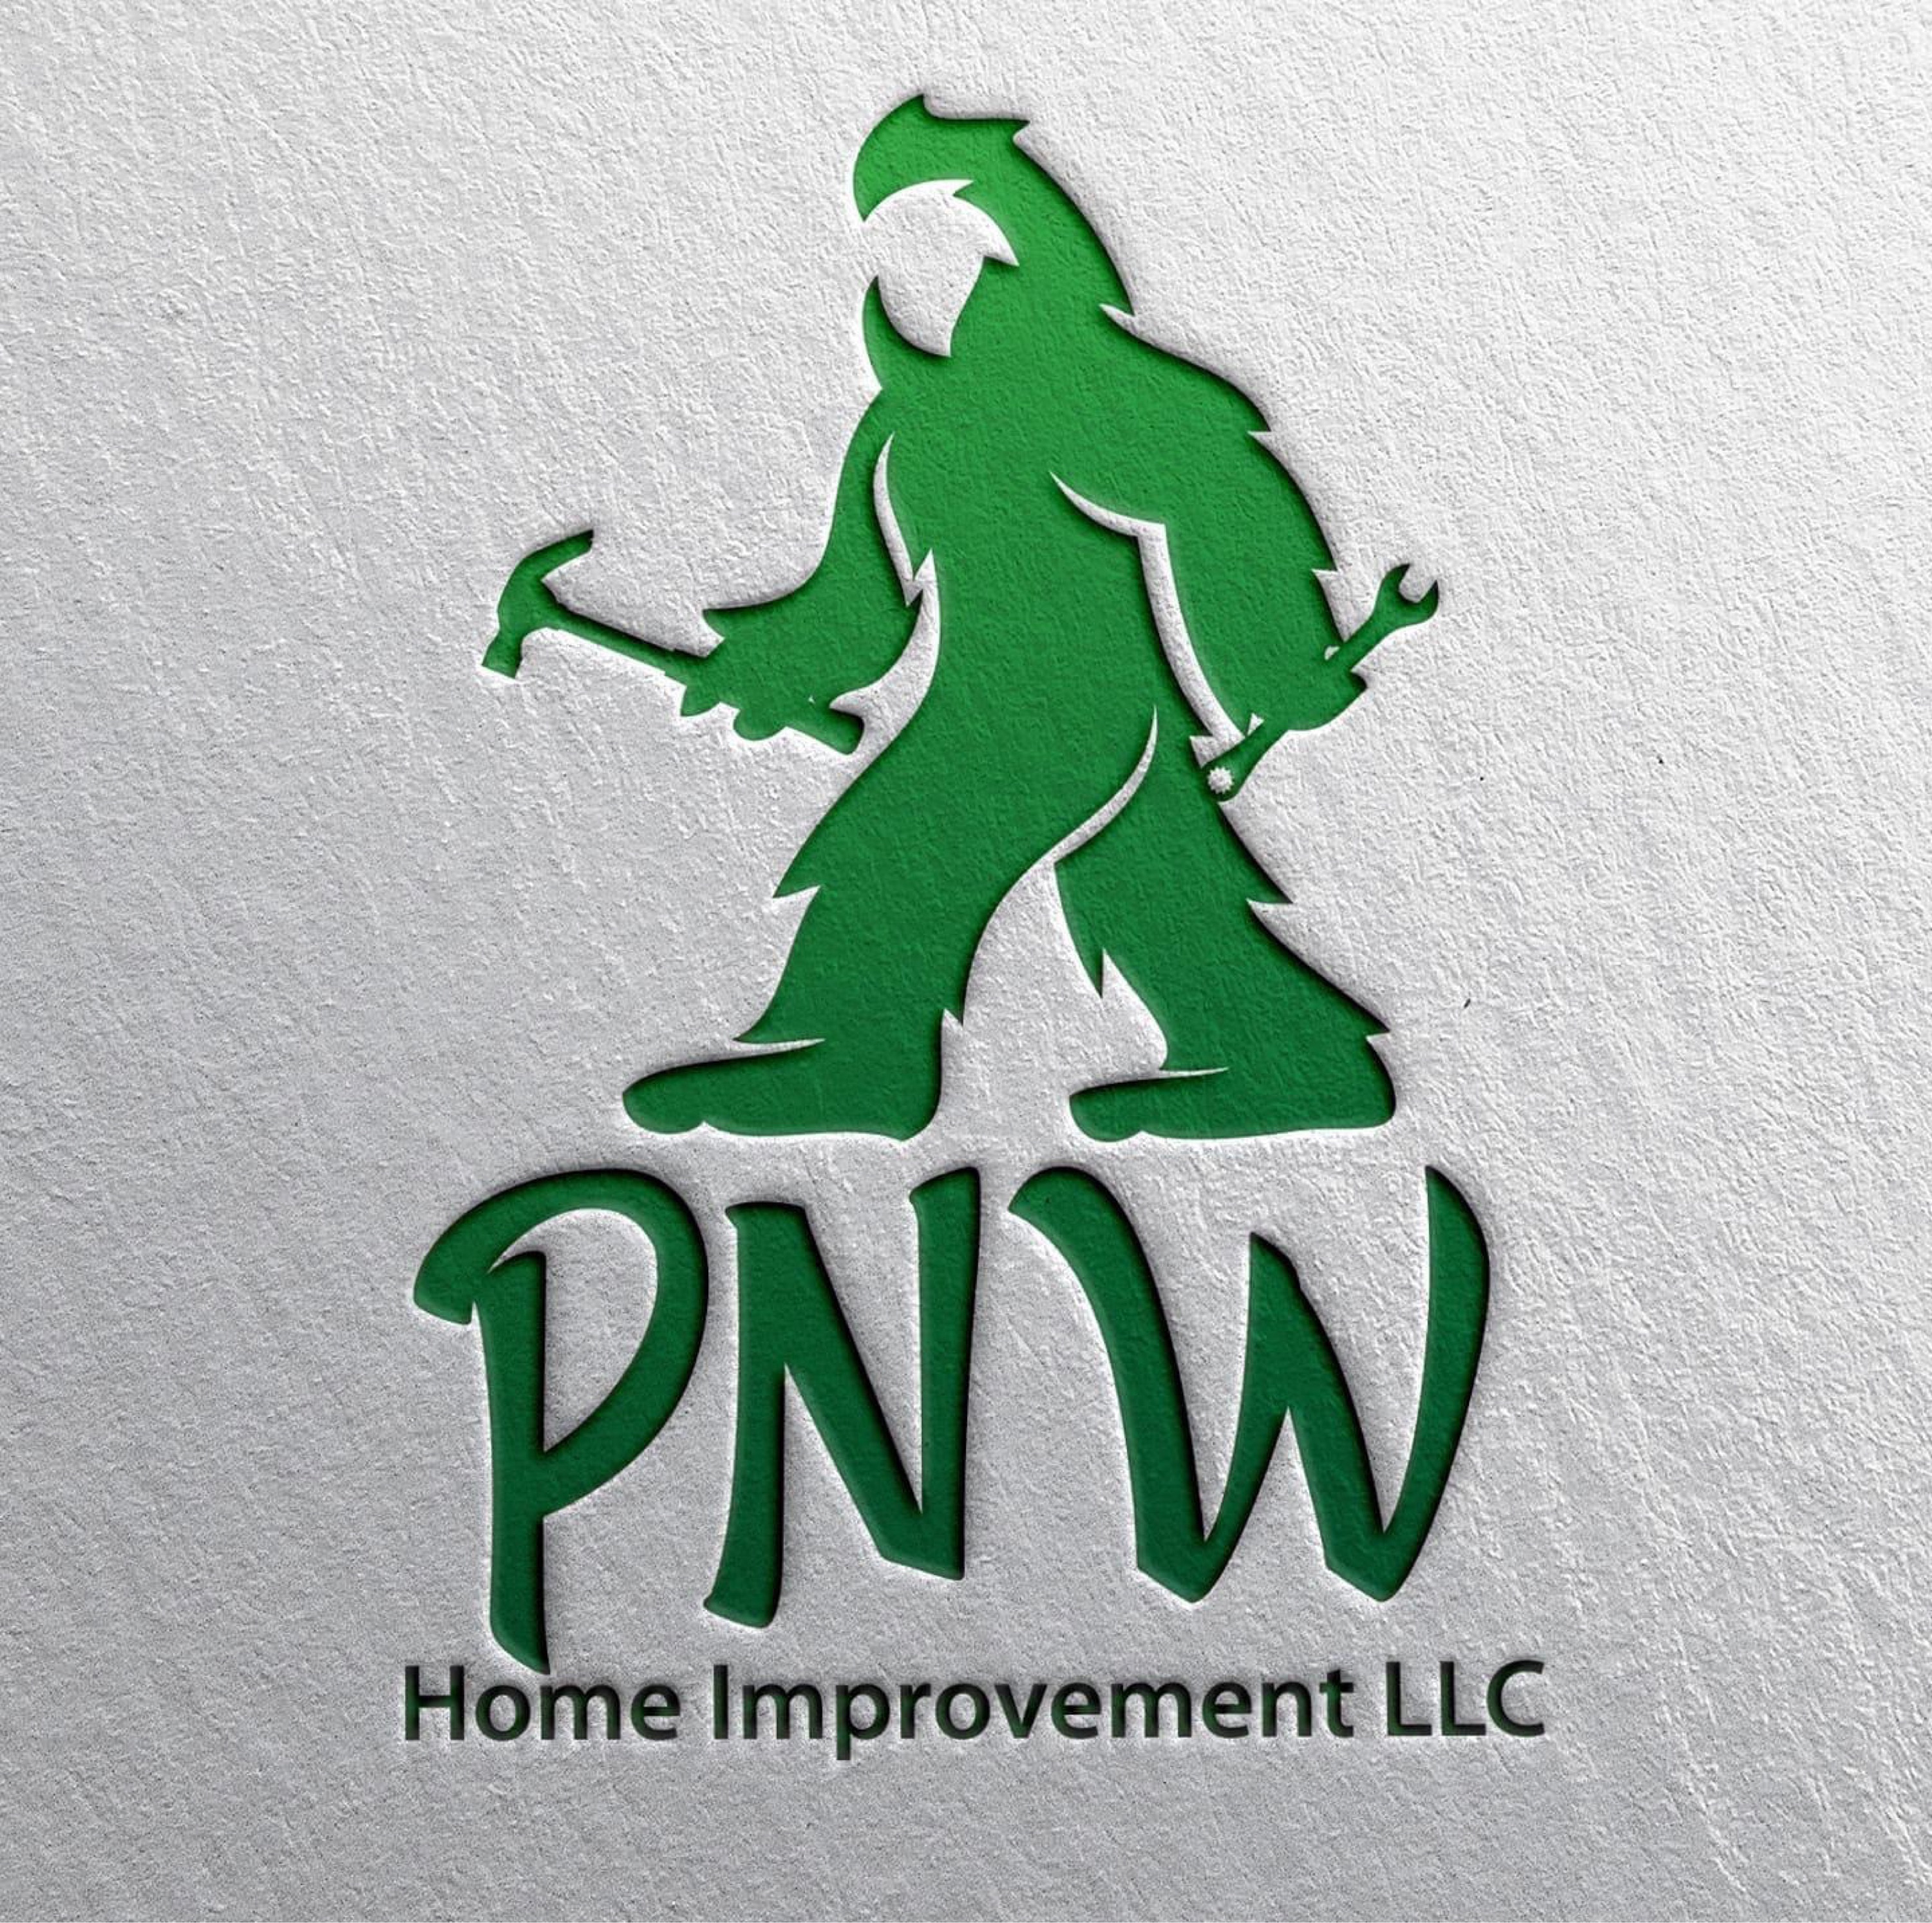 Pnw Home Improvement, LLC Logo